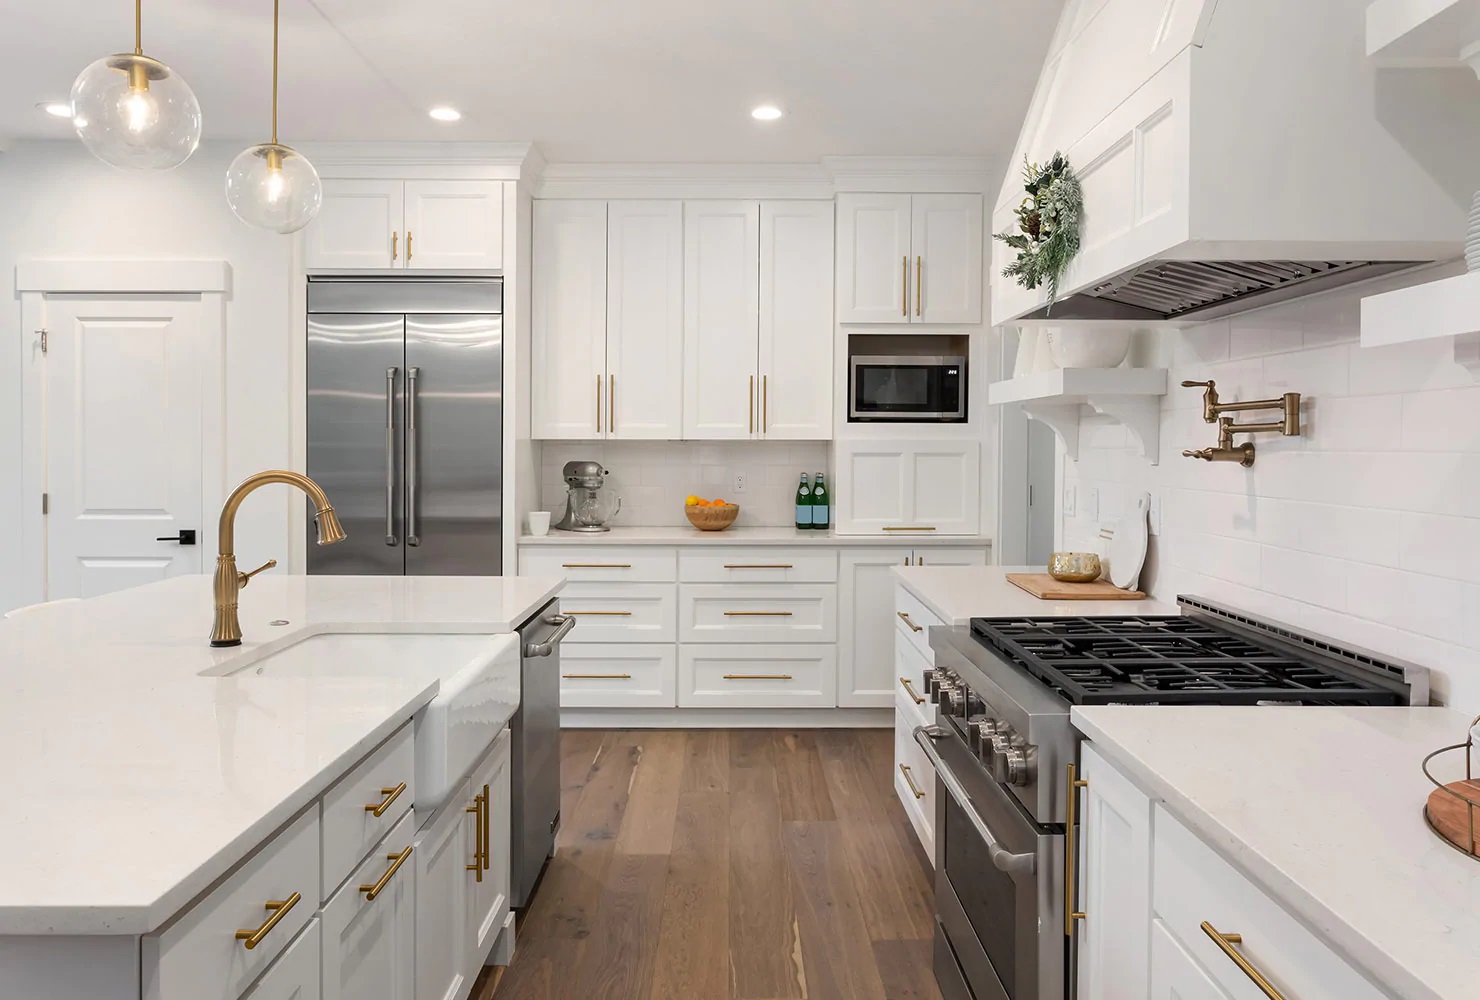 http://davisbaycustomhomes.ca/wp-content/uploads/2020/05/Beautiful-kitchen-in-luxury-home.jpg